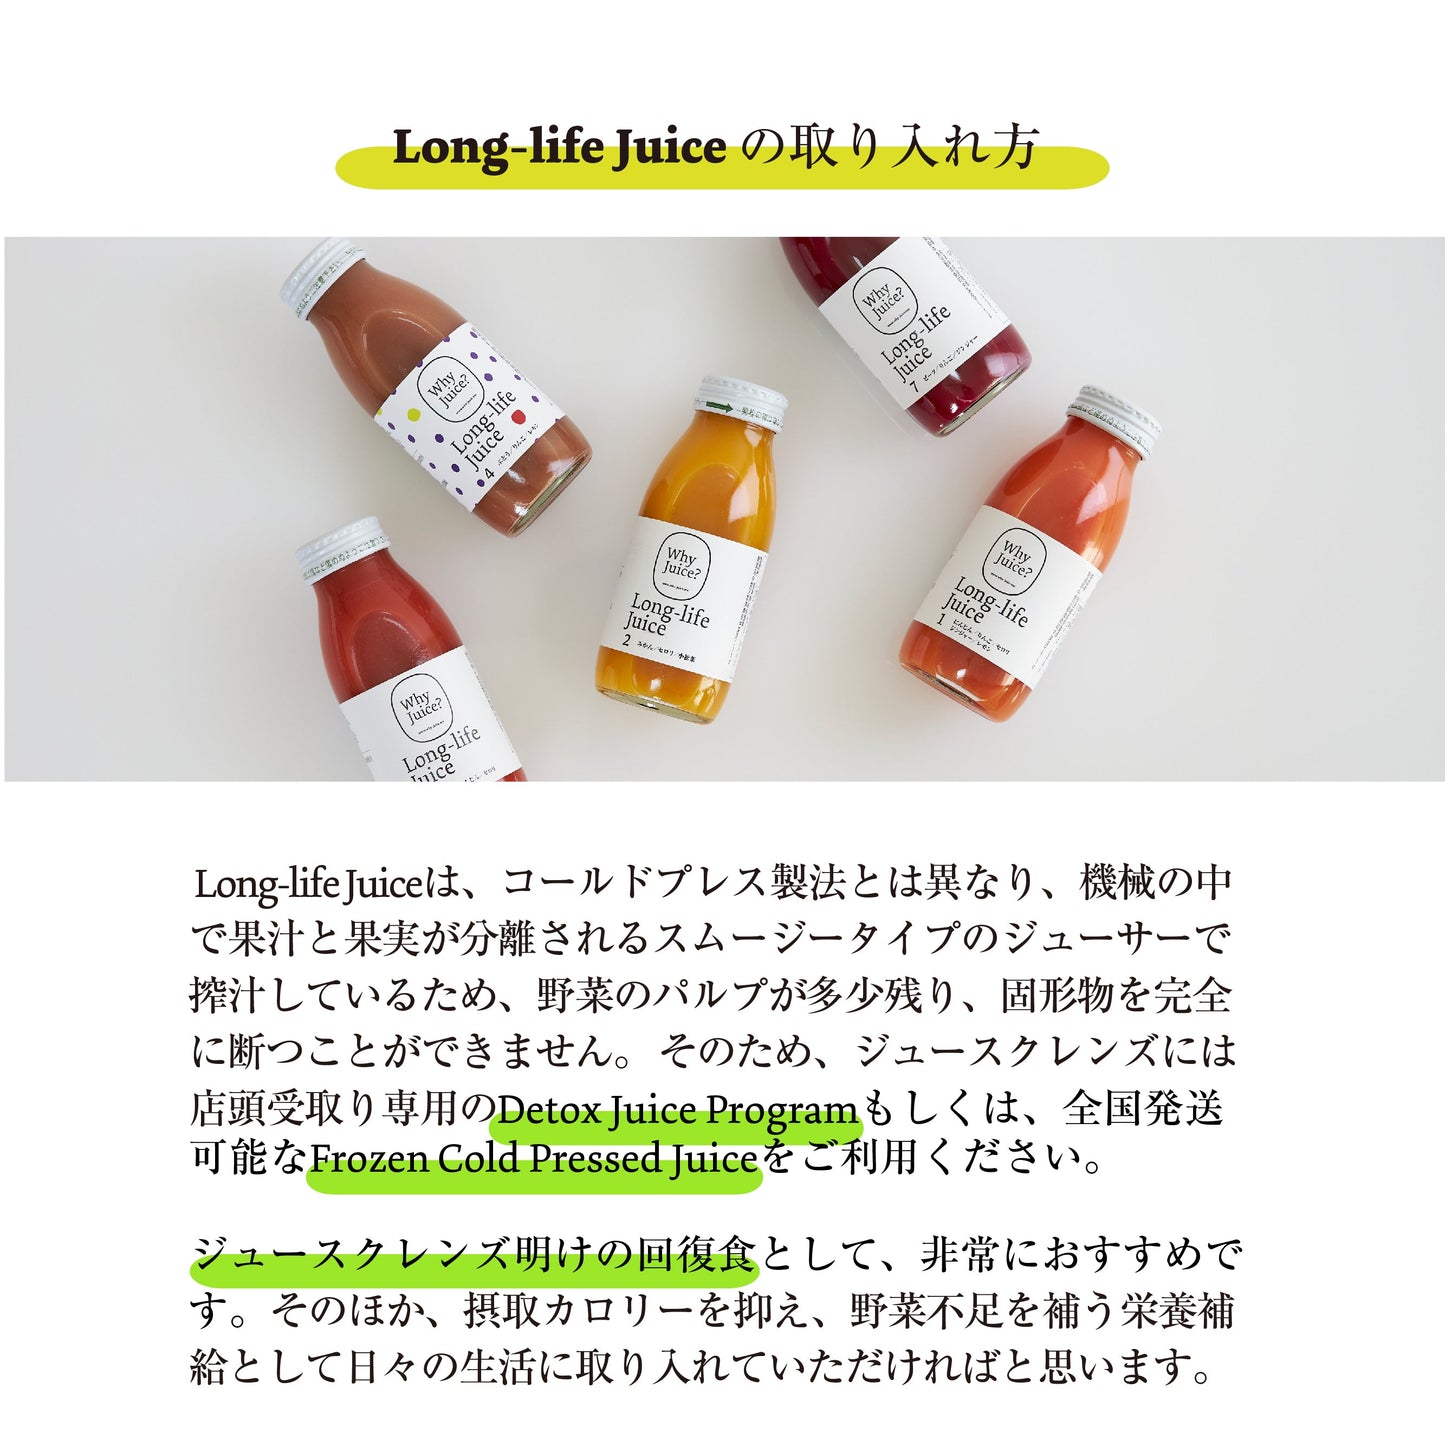 Long-life Juice：5種類ミックス (20本入)